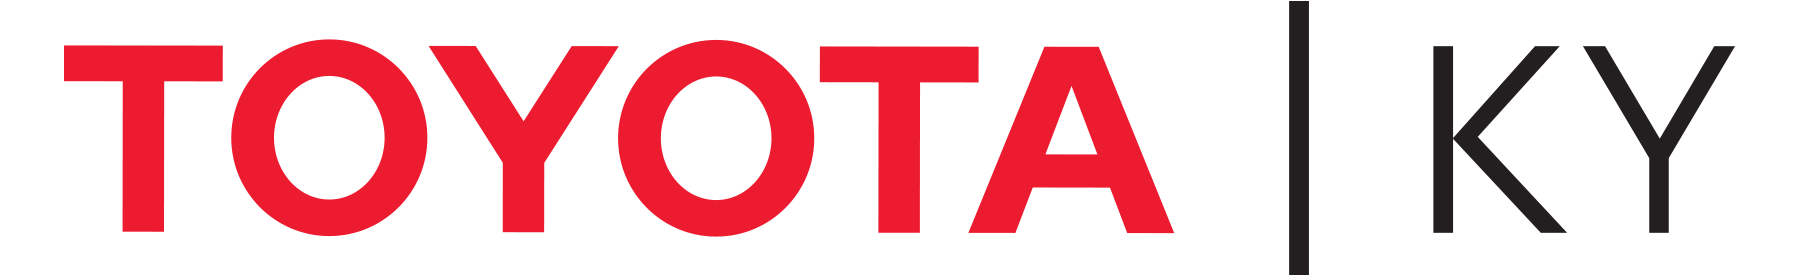 C. Toyota (Nivel 2)